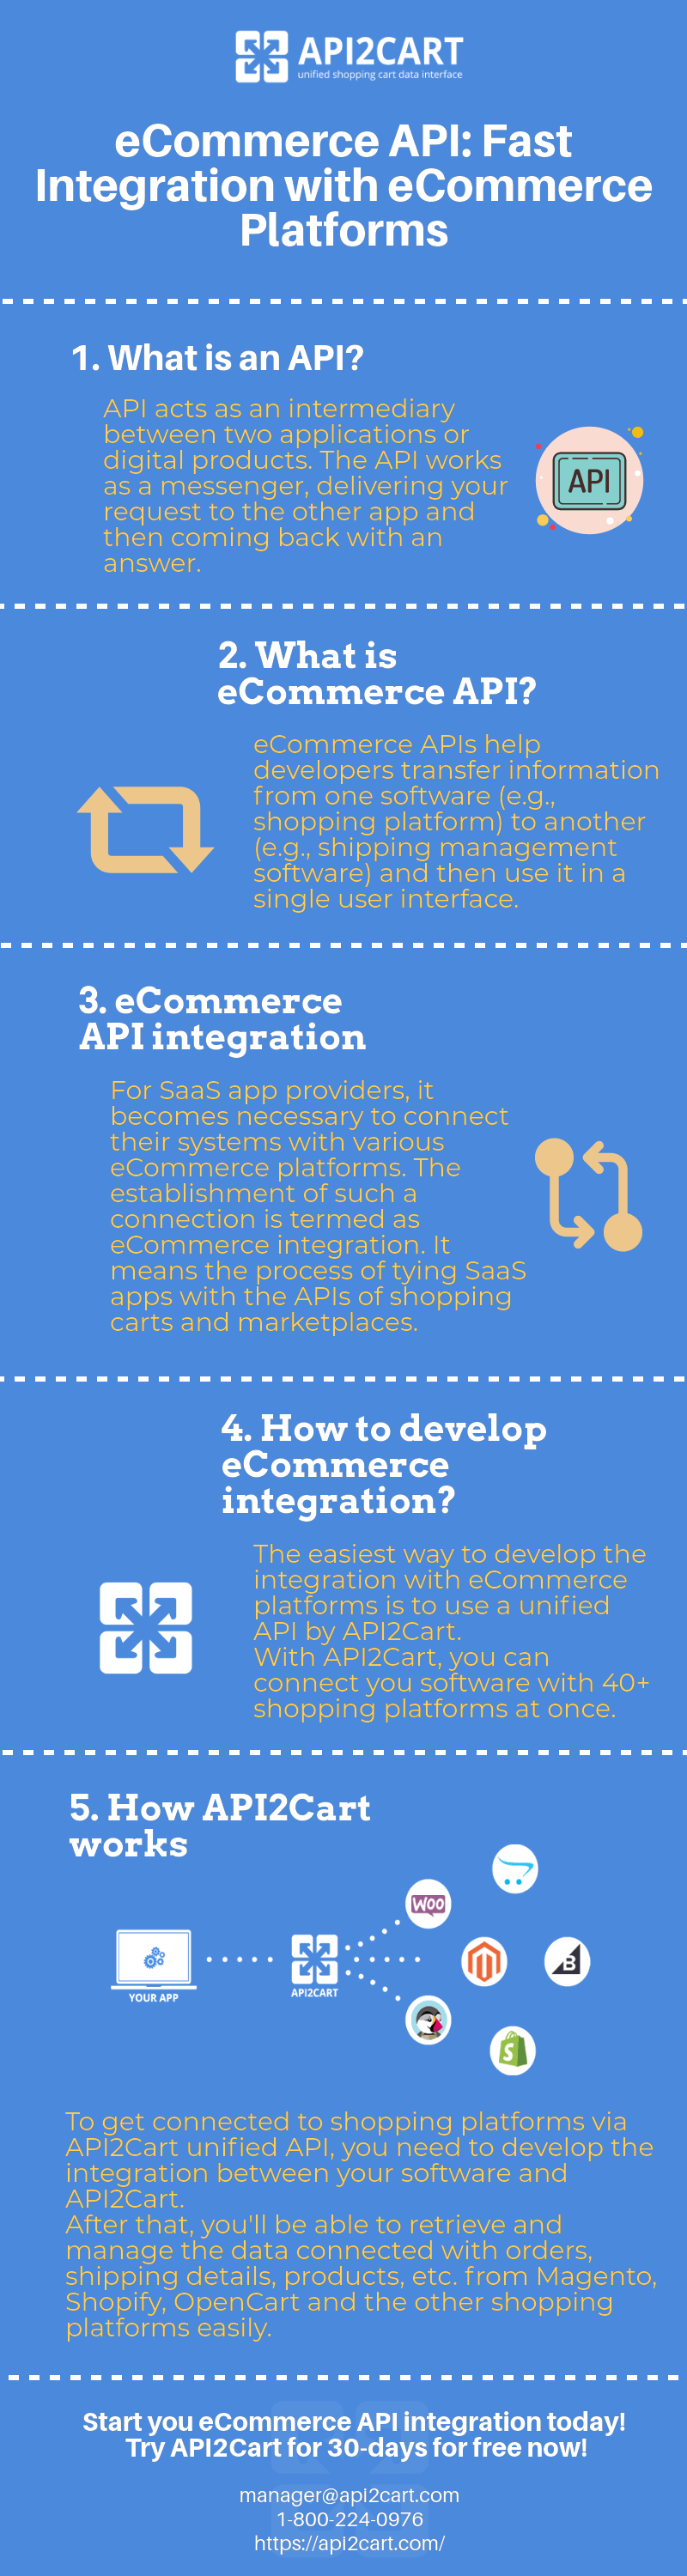 eCommerce-API